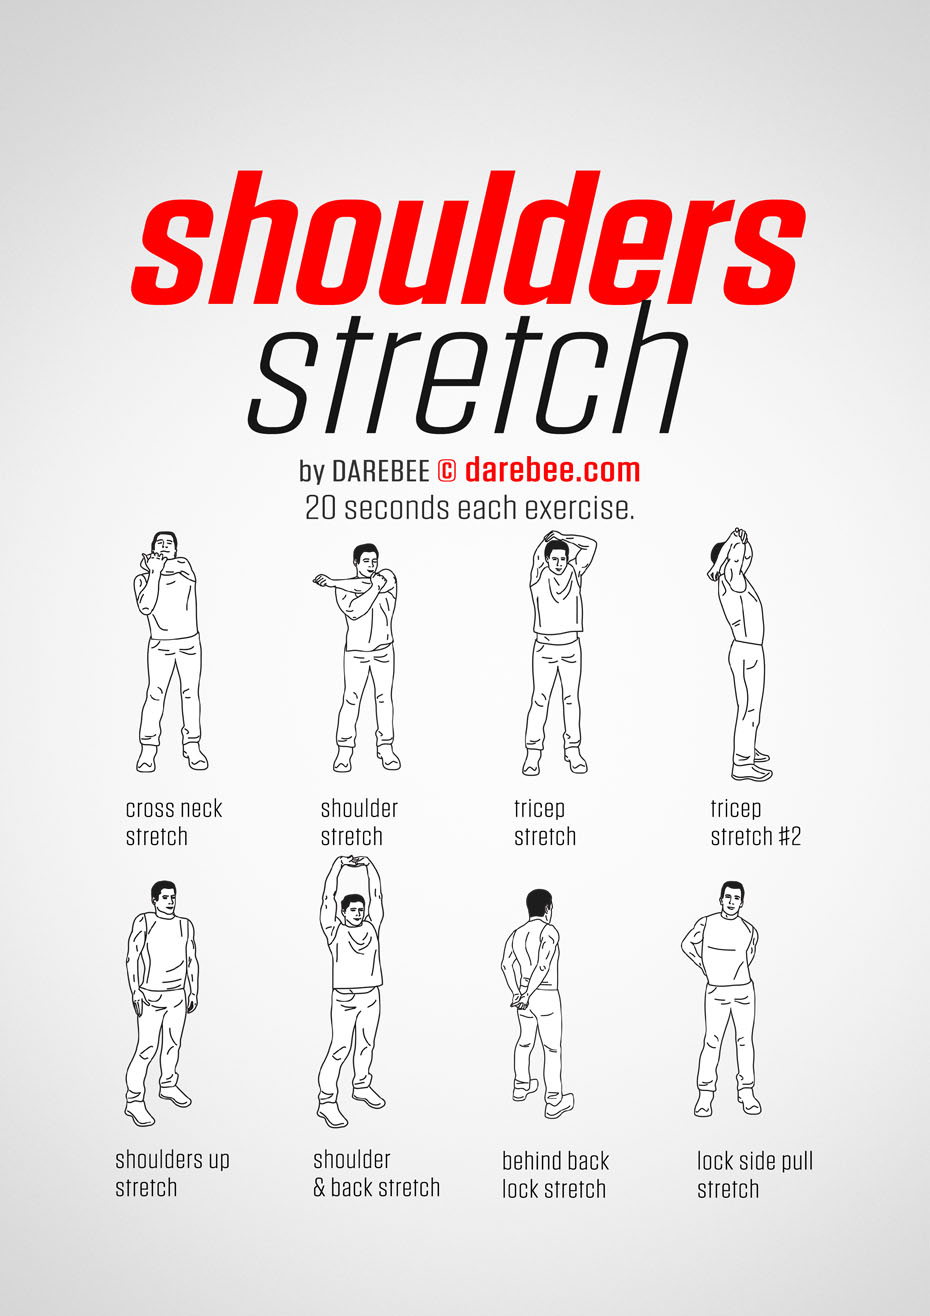 https://darebee.com/images/workouts/shoulder-stretch-workout.jpg